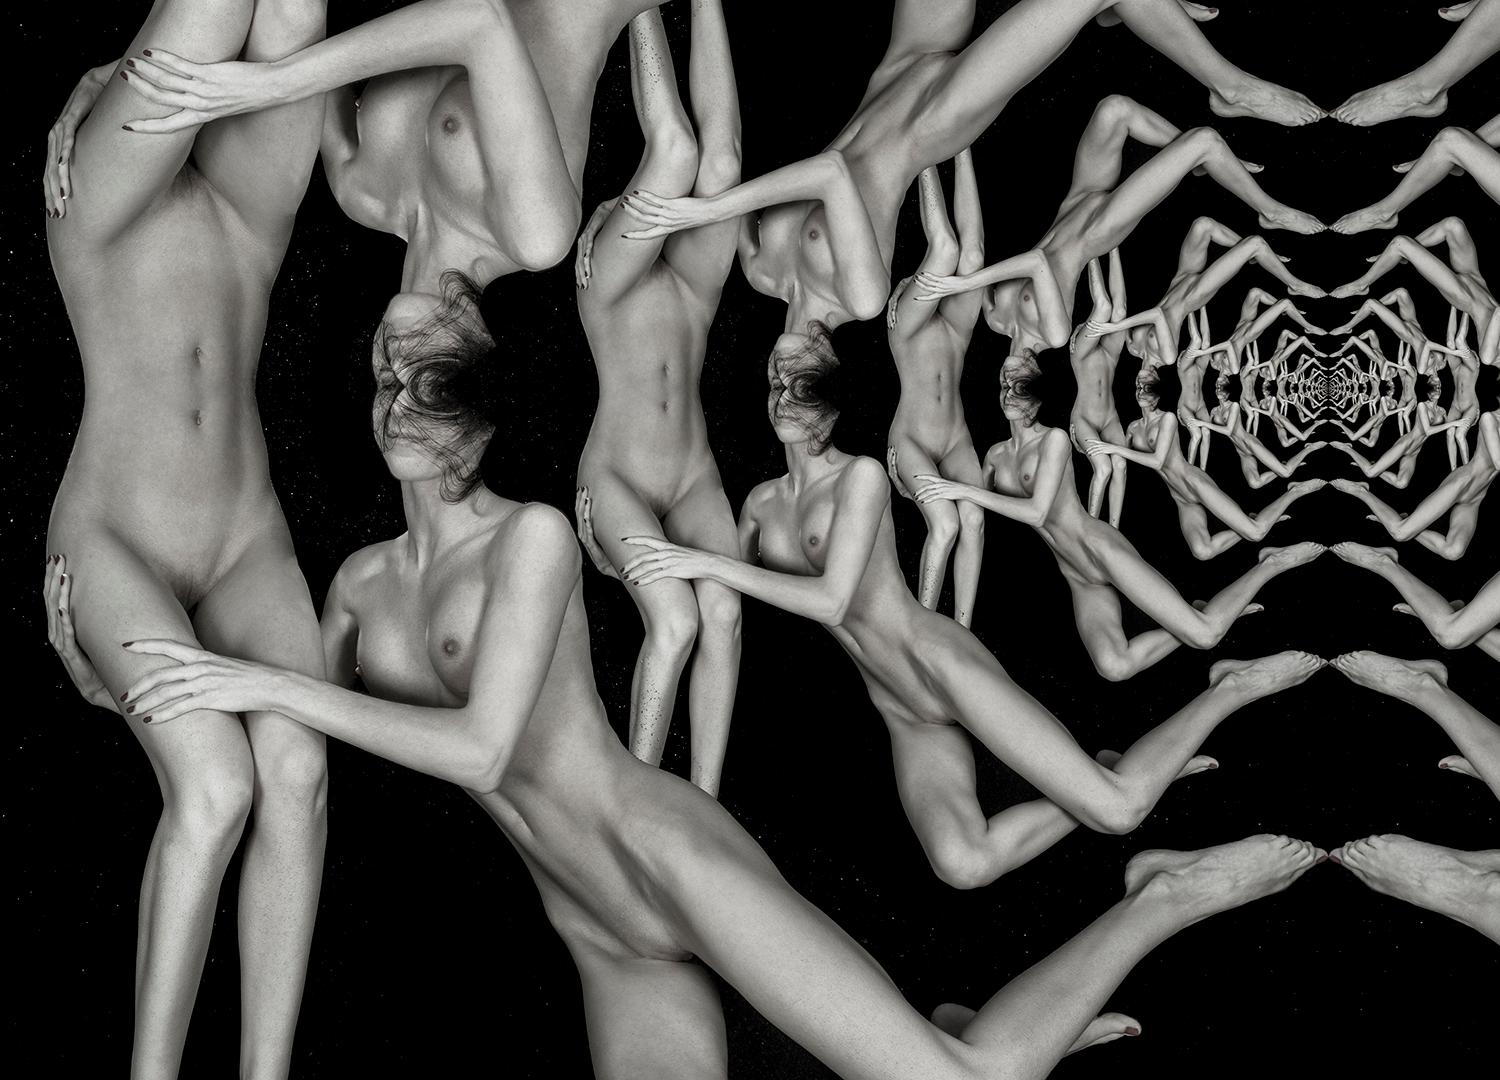 Kaleidoscope - underwater black&white nude photograph - archival print 17x23.5